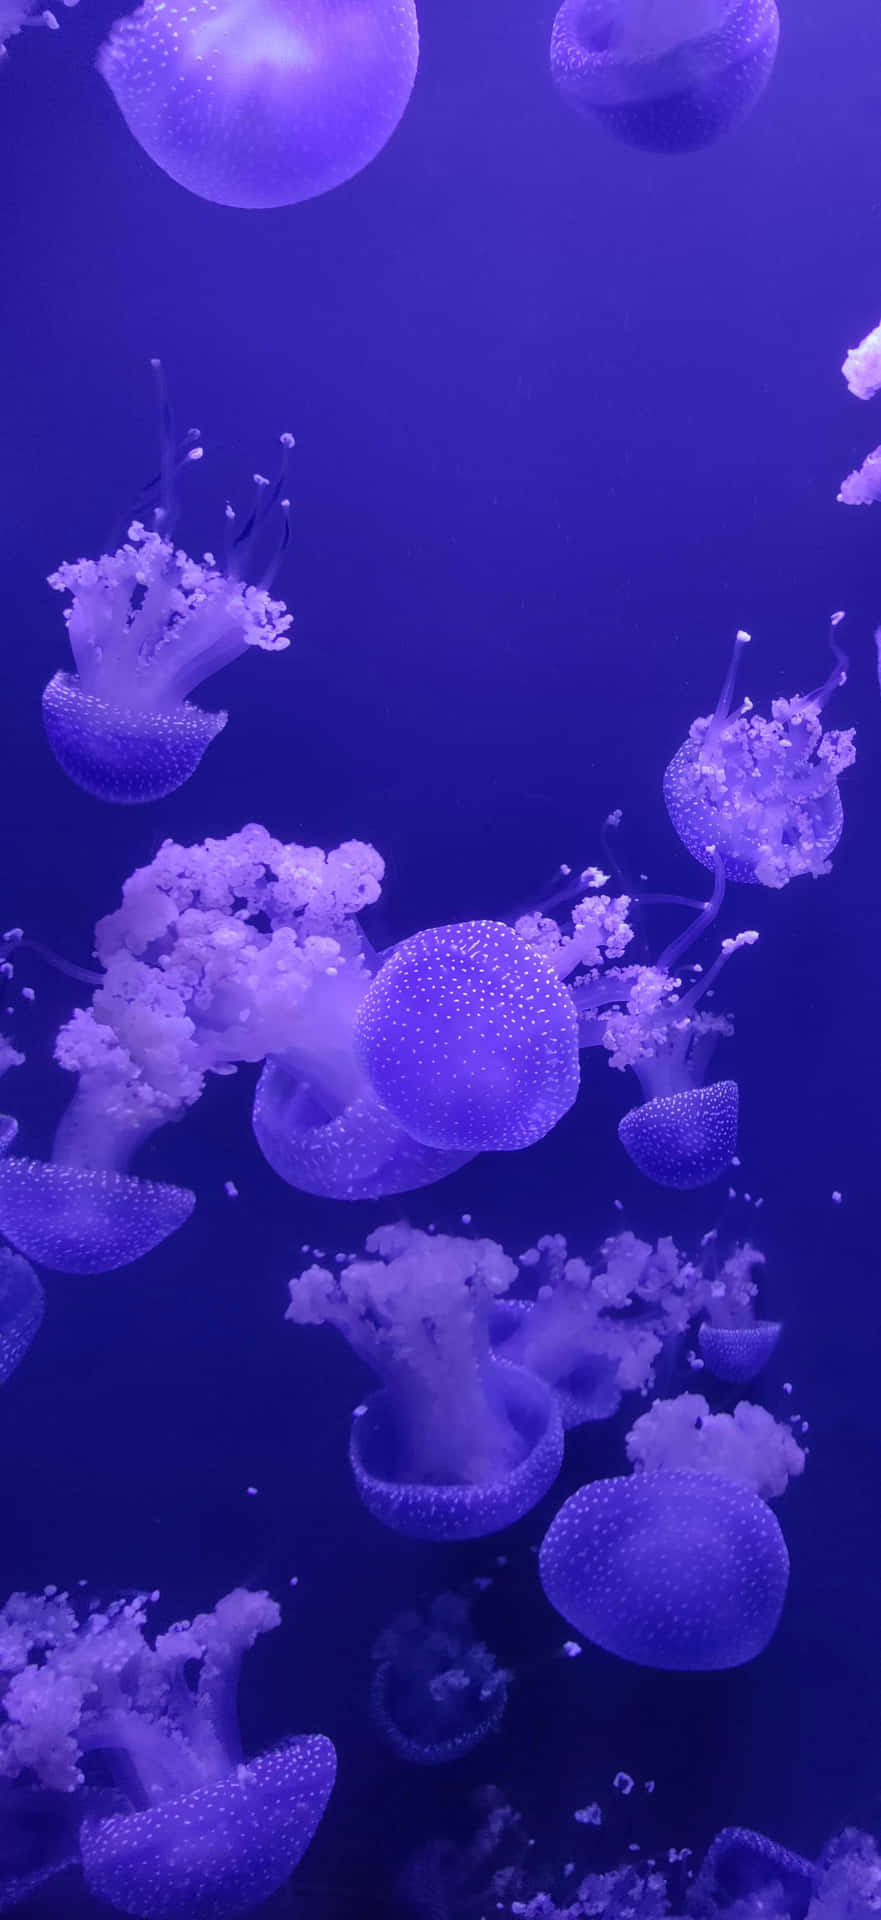 Ethereal_ Jellyfish_ Underwater_ Ballet.jpg Wallpaper